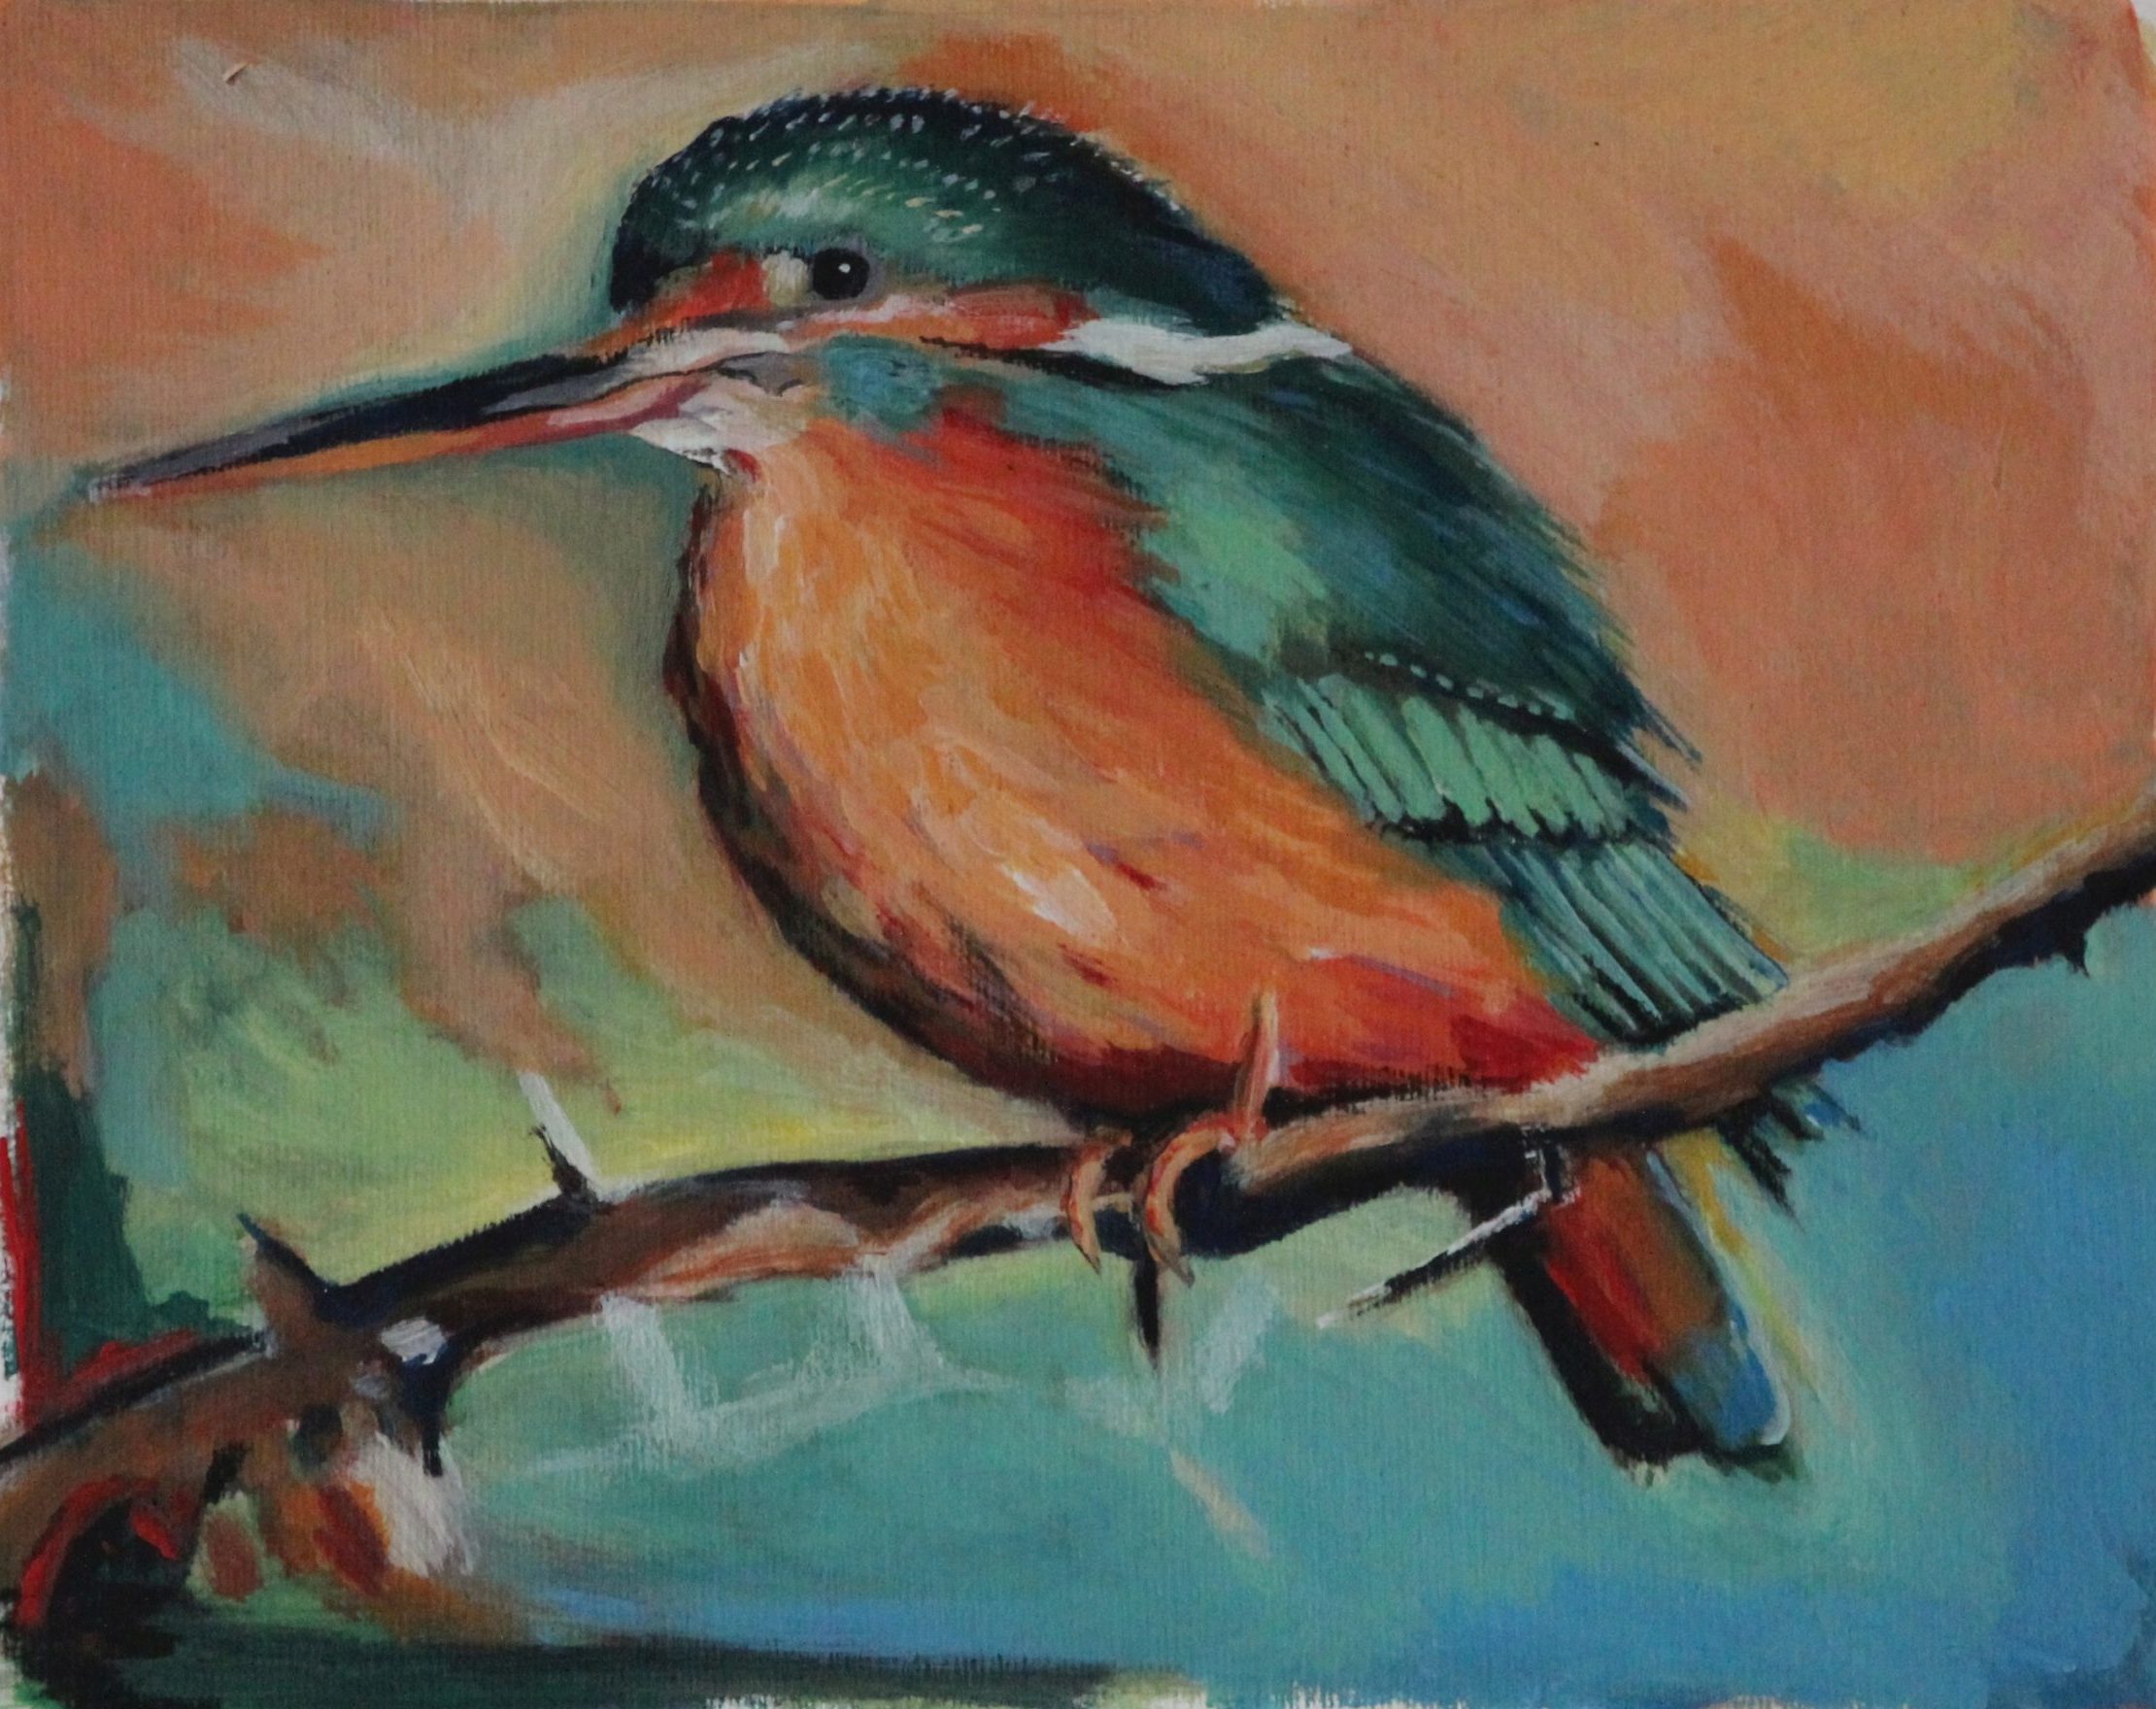 Blue Bird meets orange (2001)